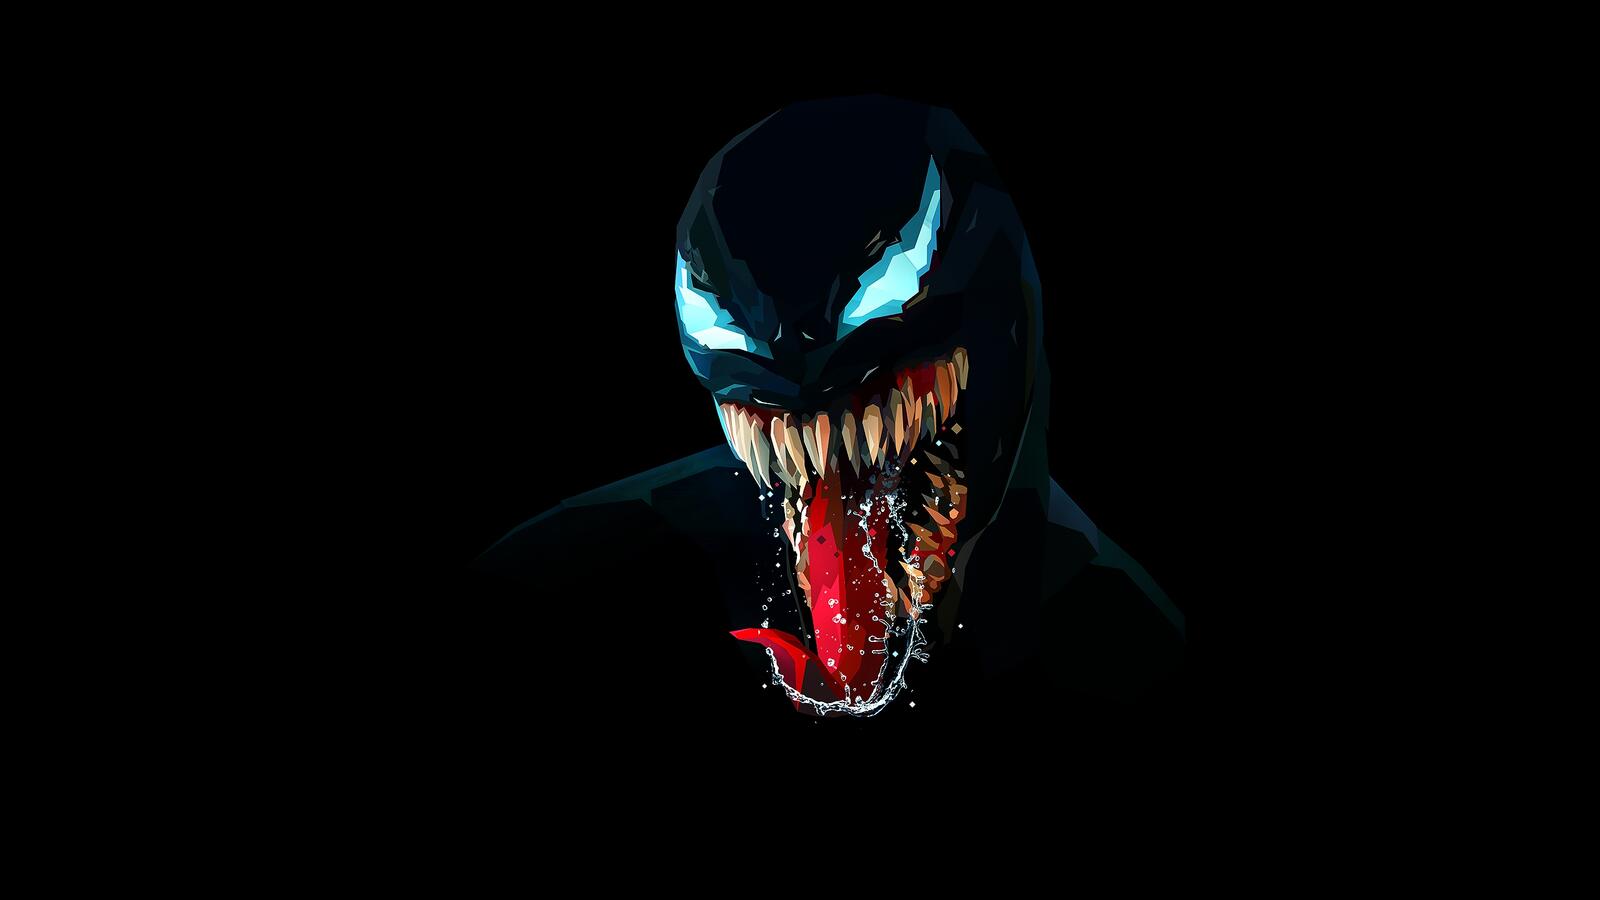 Бесплатное фото Рисунок venom на черном фоне